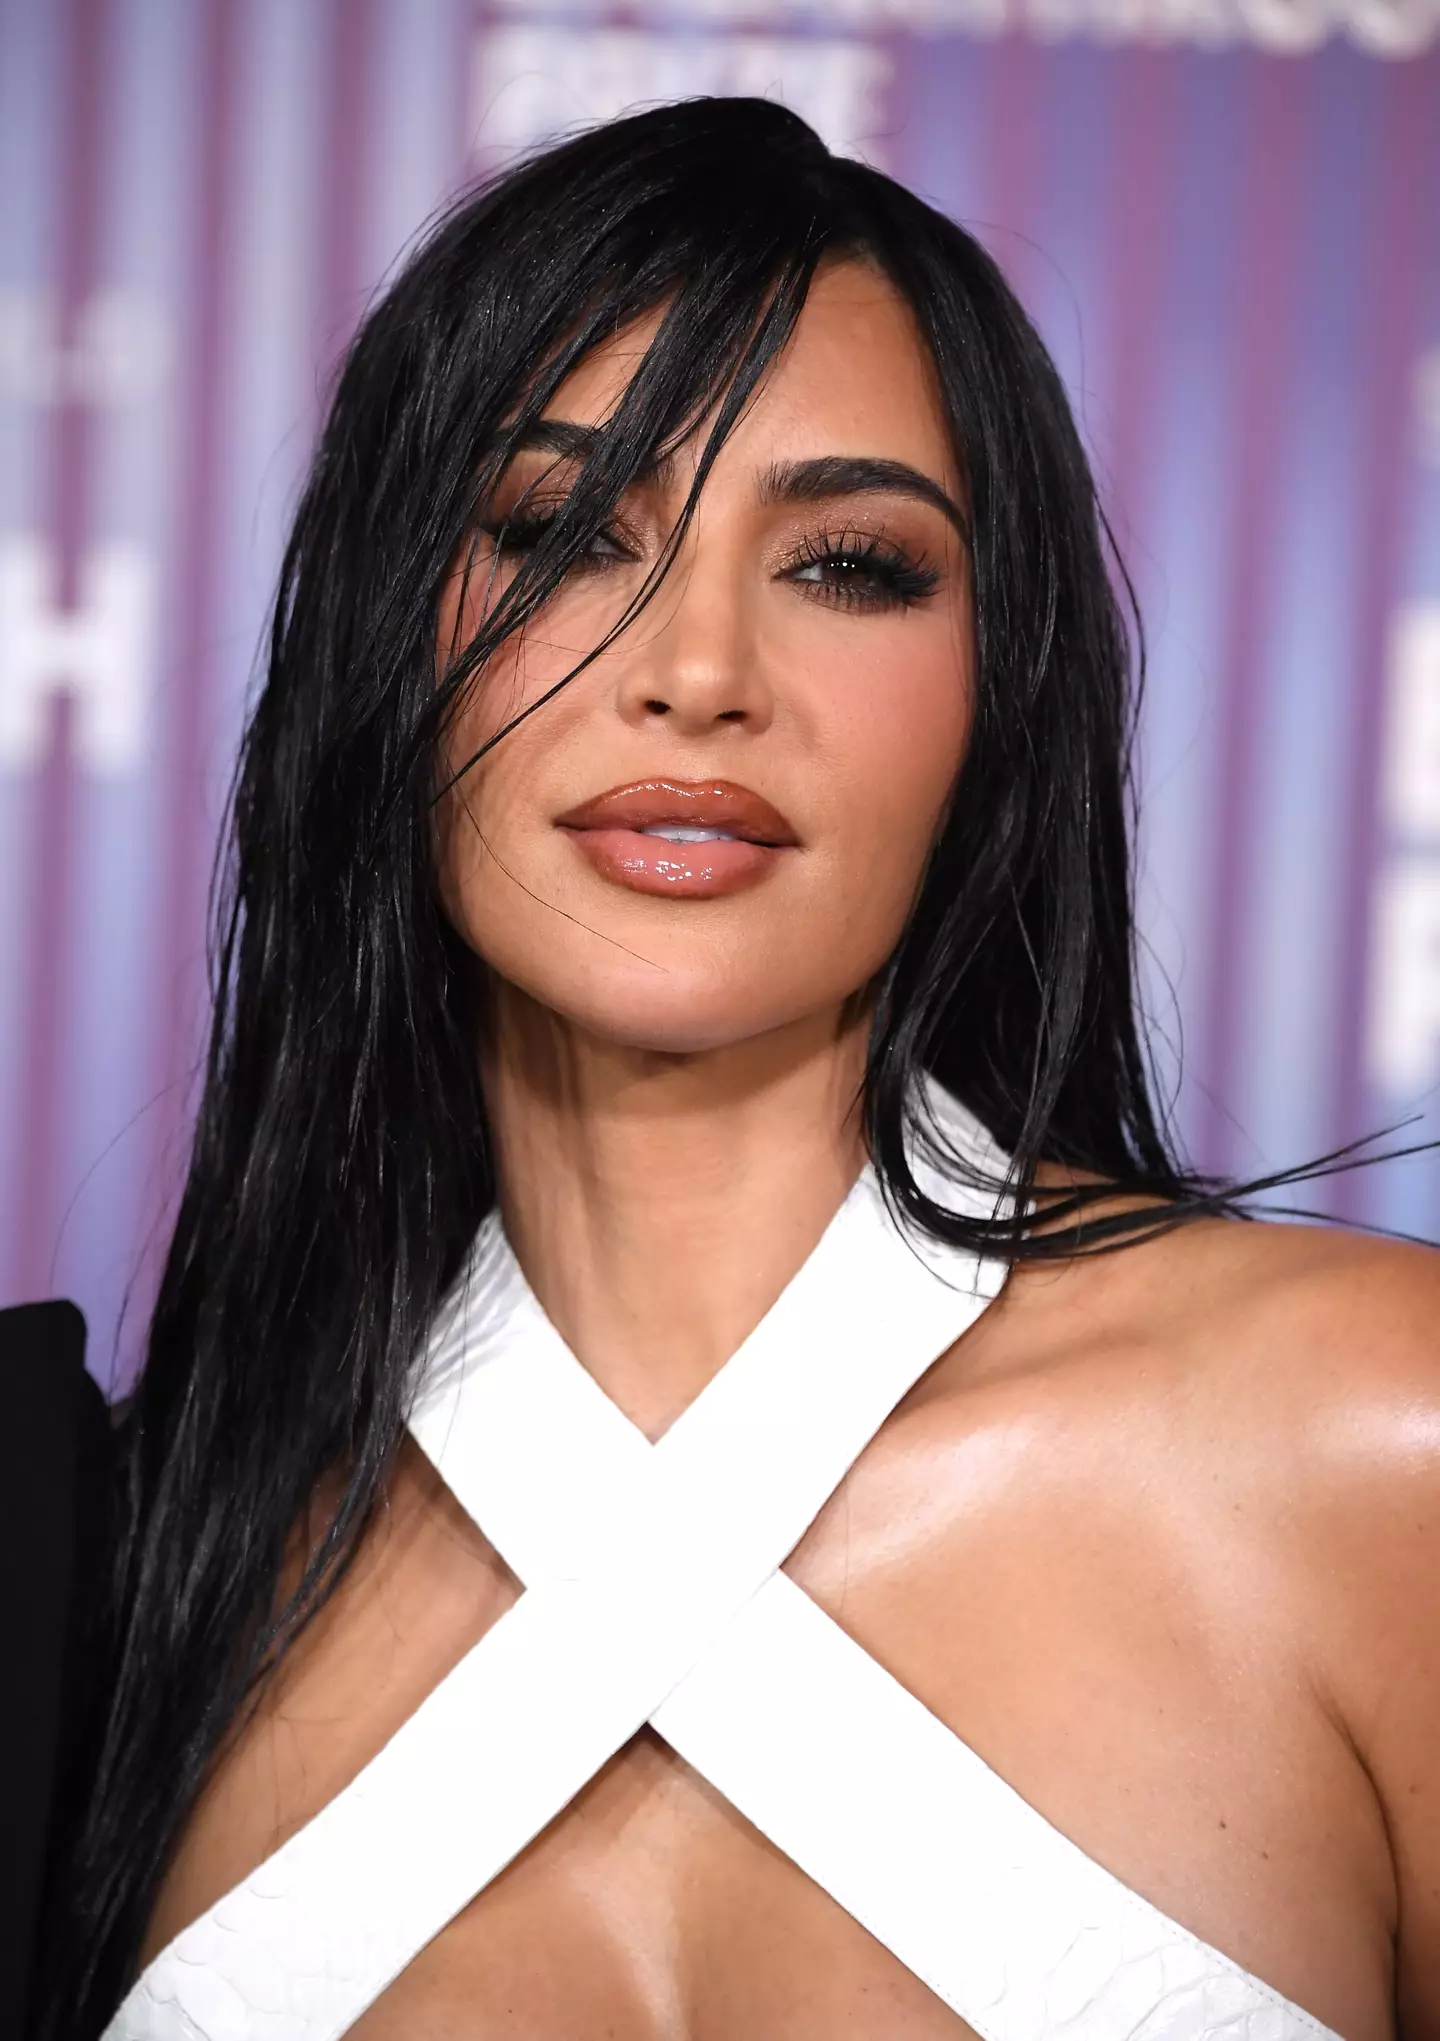 An alleged Kim Kardashian 'diss track' has surprised many. (Steve Granitz/FilmMagic)